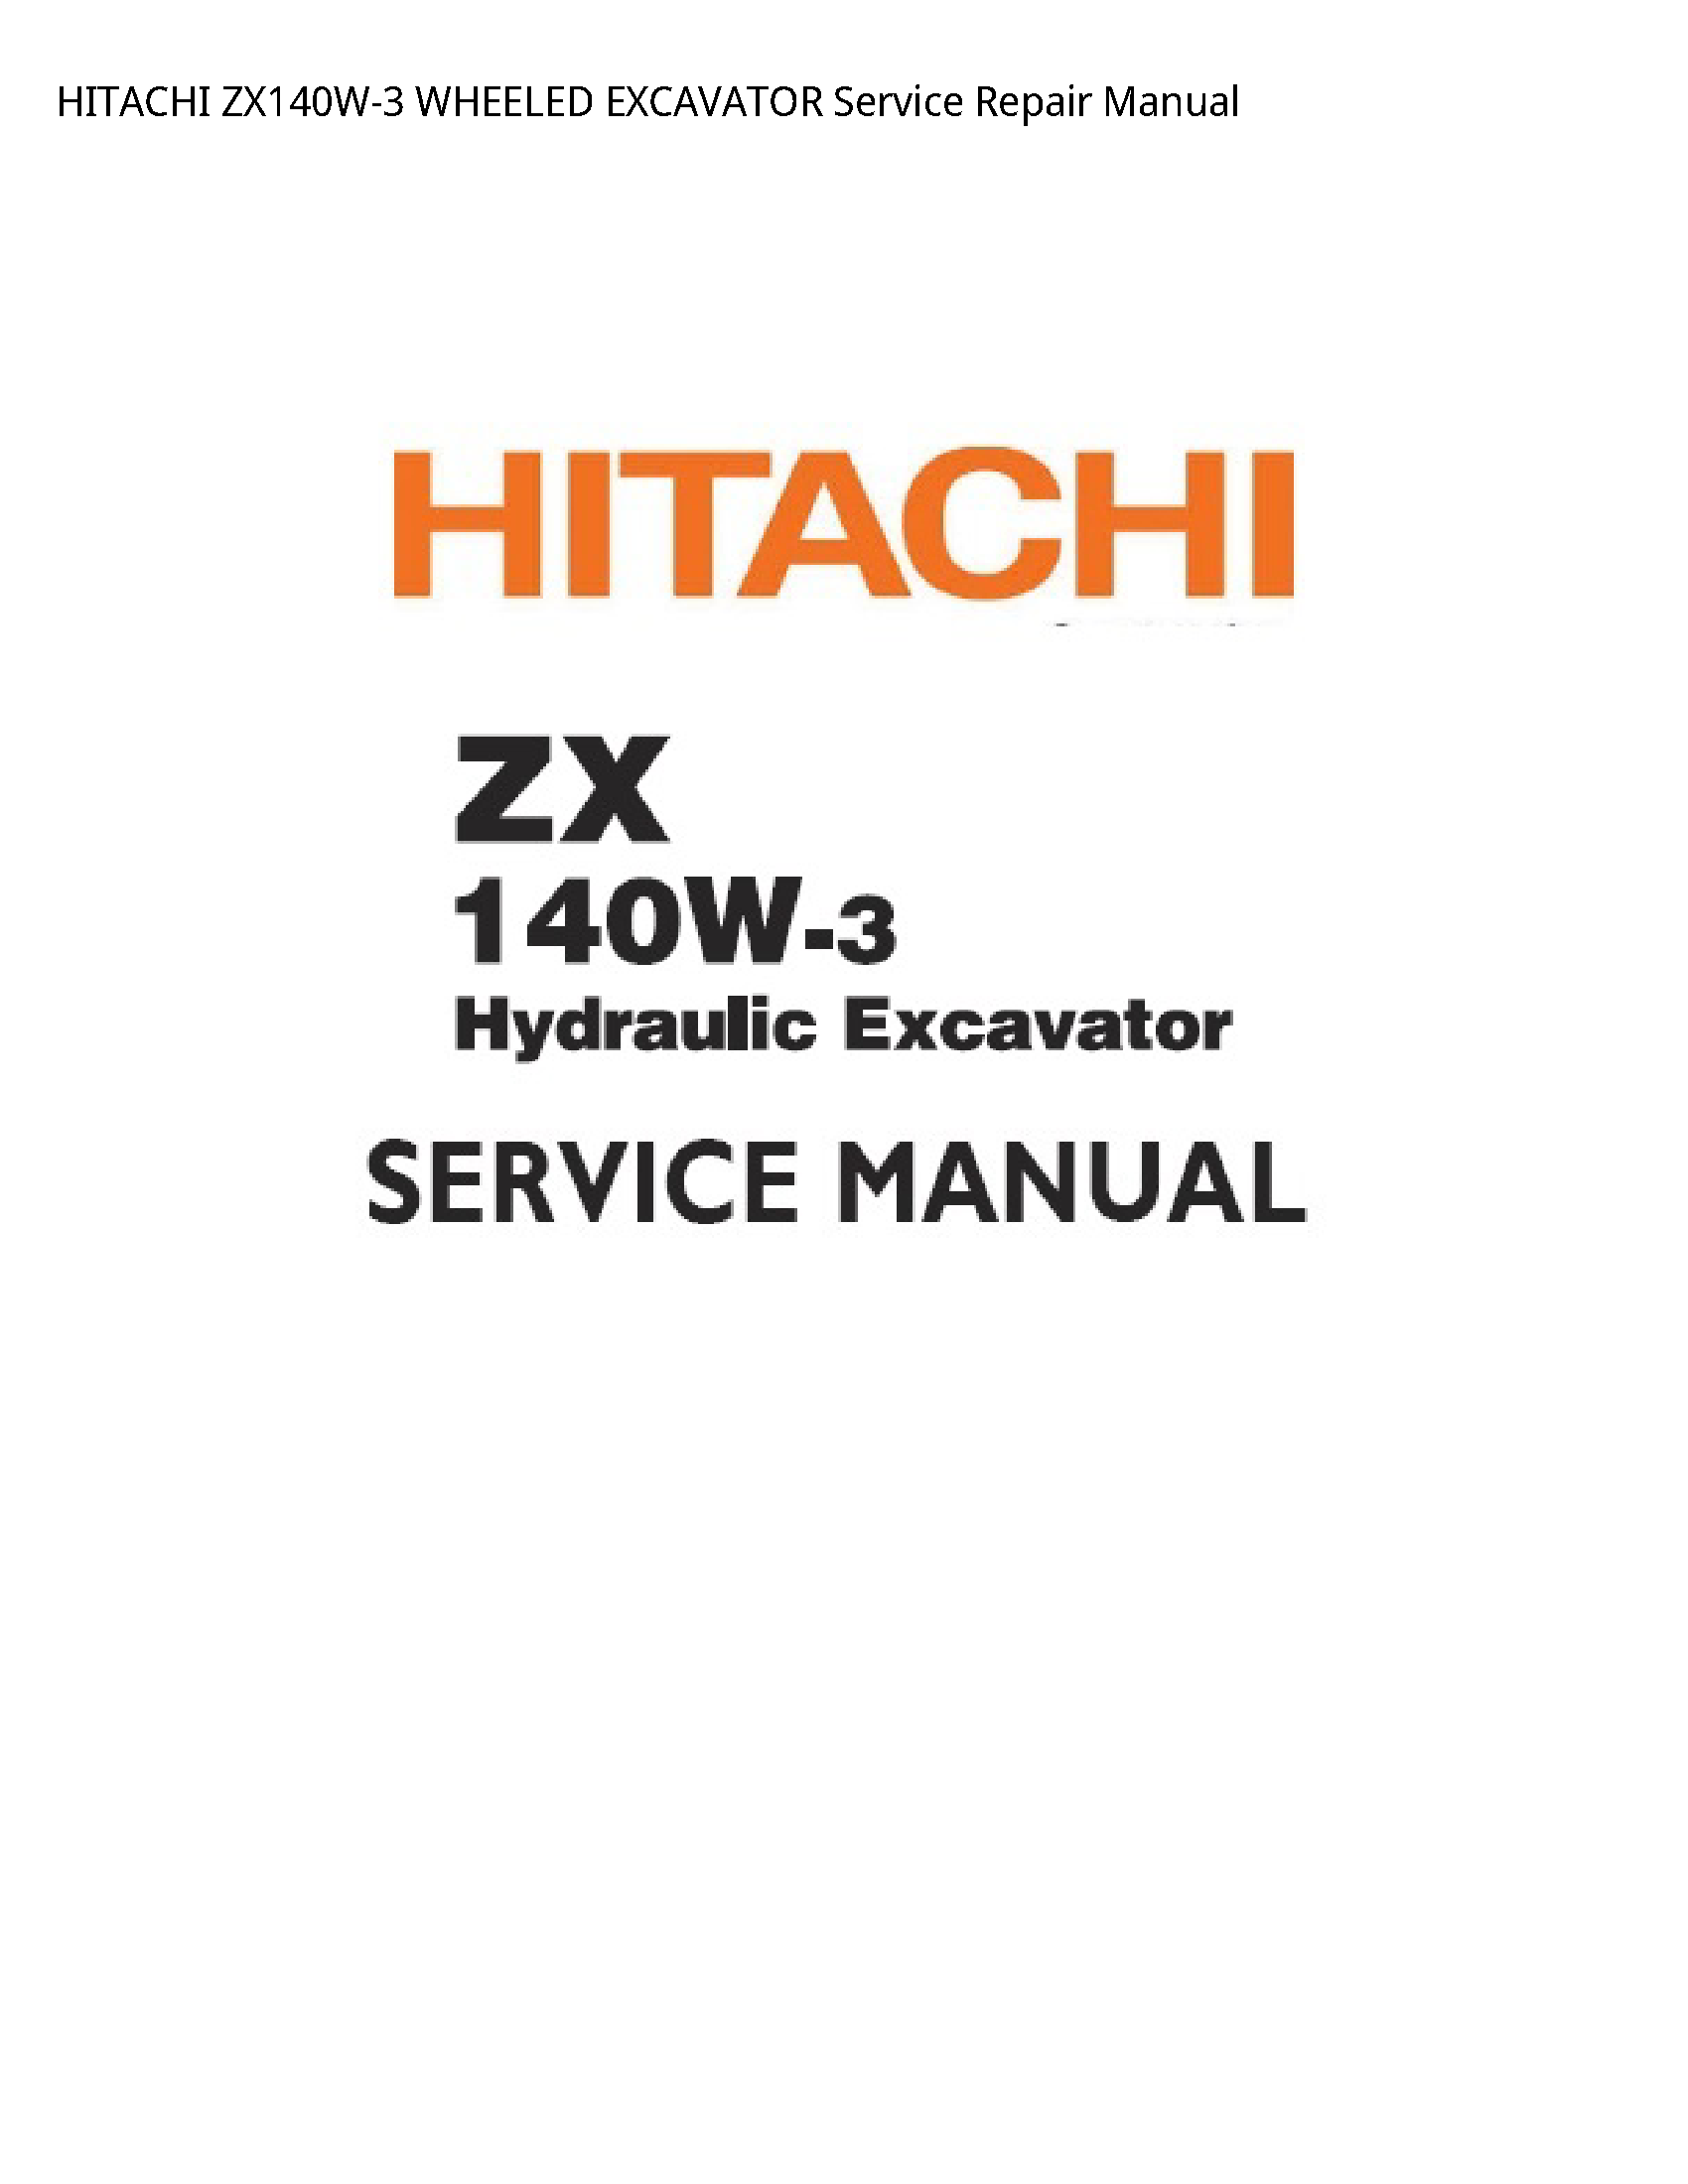 Hitachi ZX140W-3 WHEELED EXCAVATOR manual